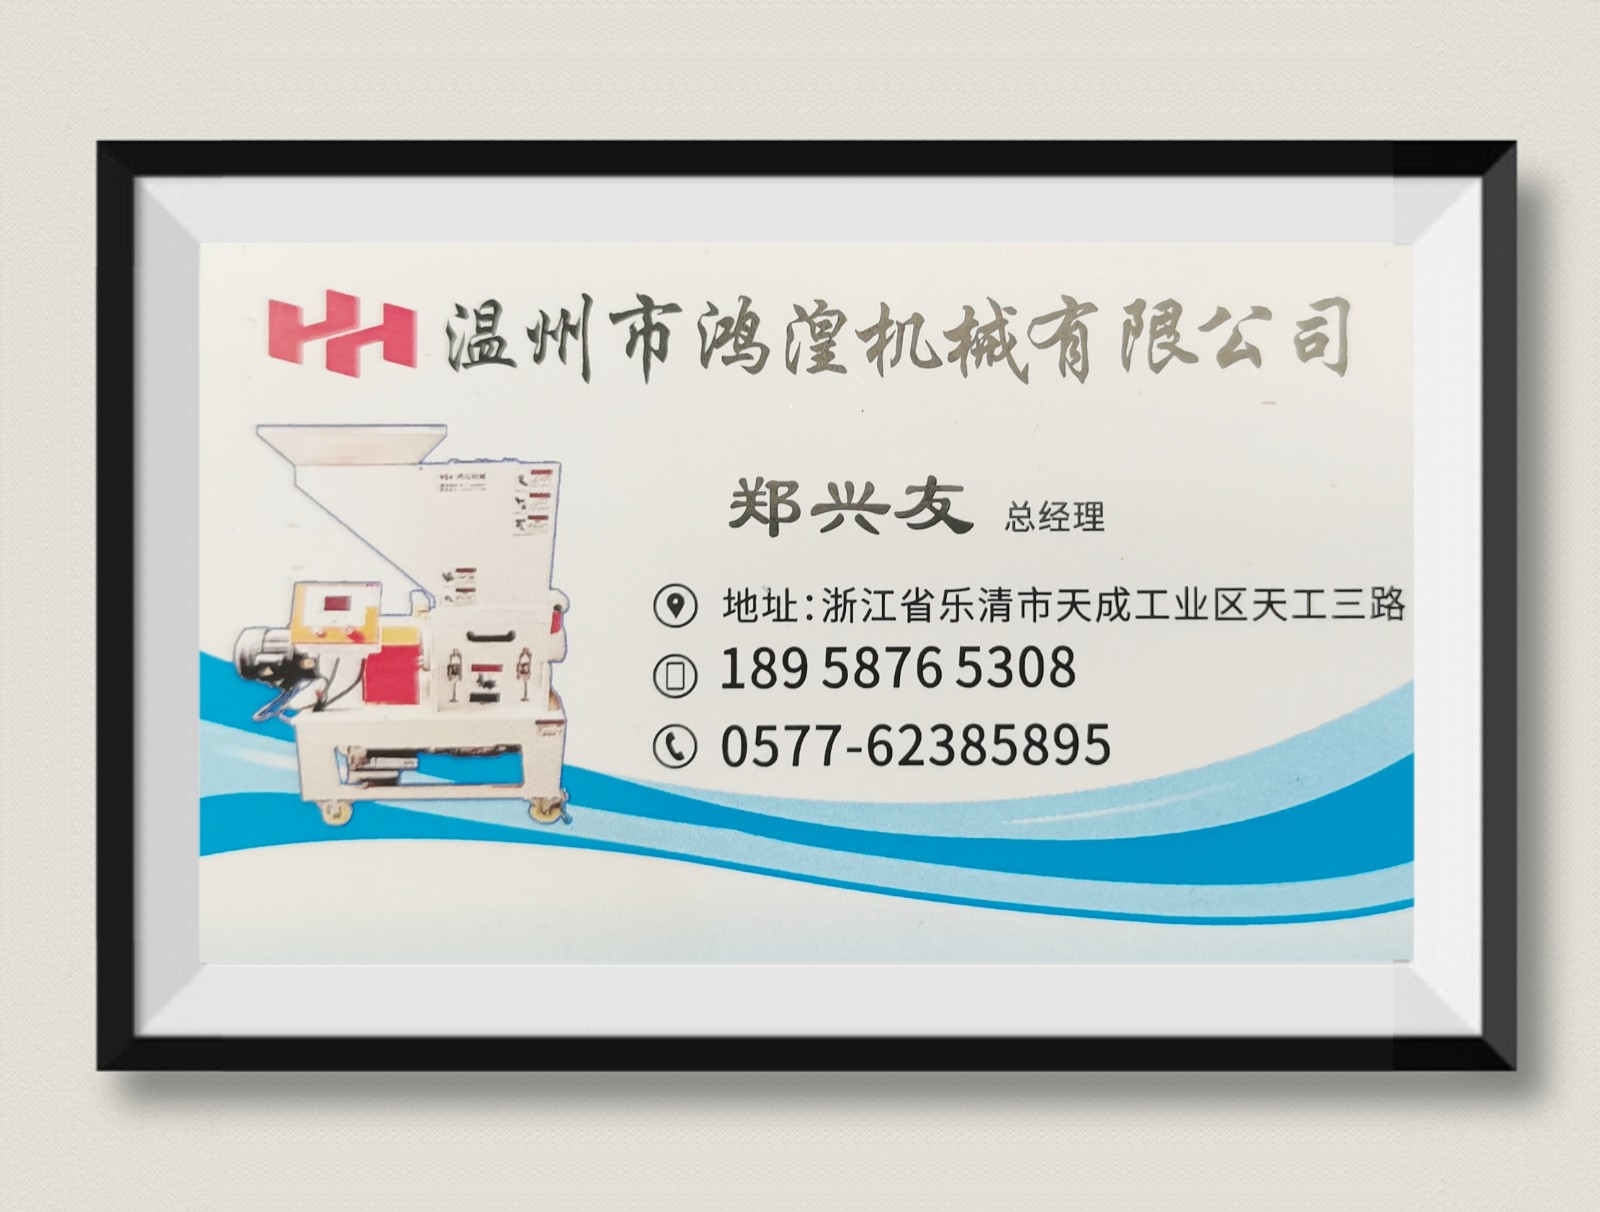 COTV直播-温州市鸿湟机械有限公司生产销售各种粉碎机设备，欢迎大家光临！